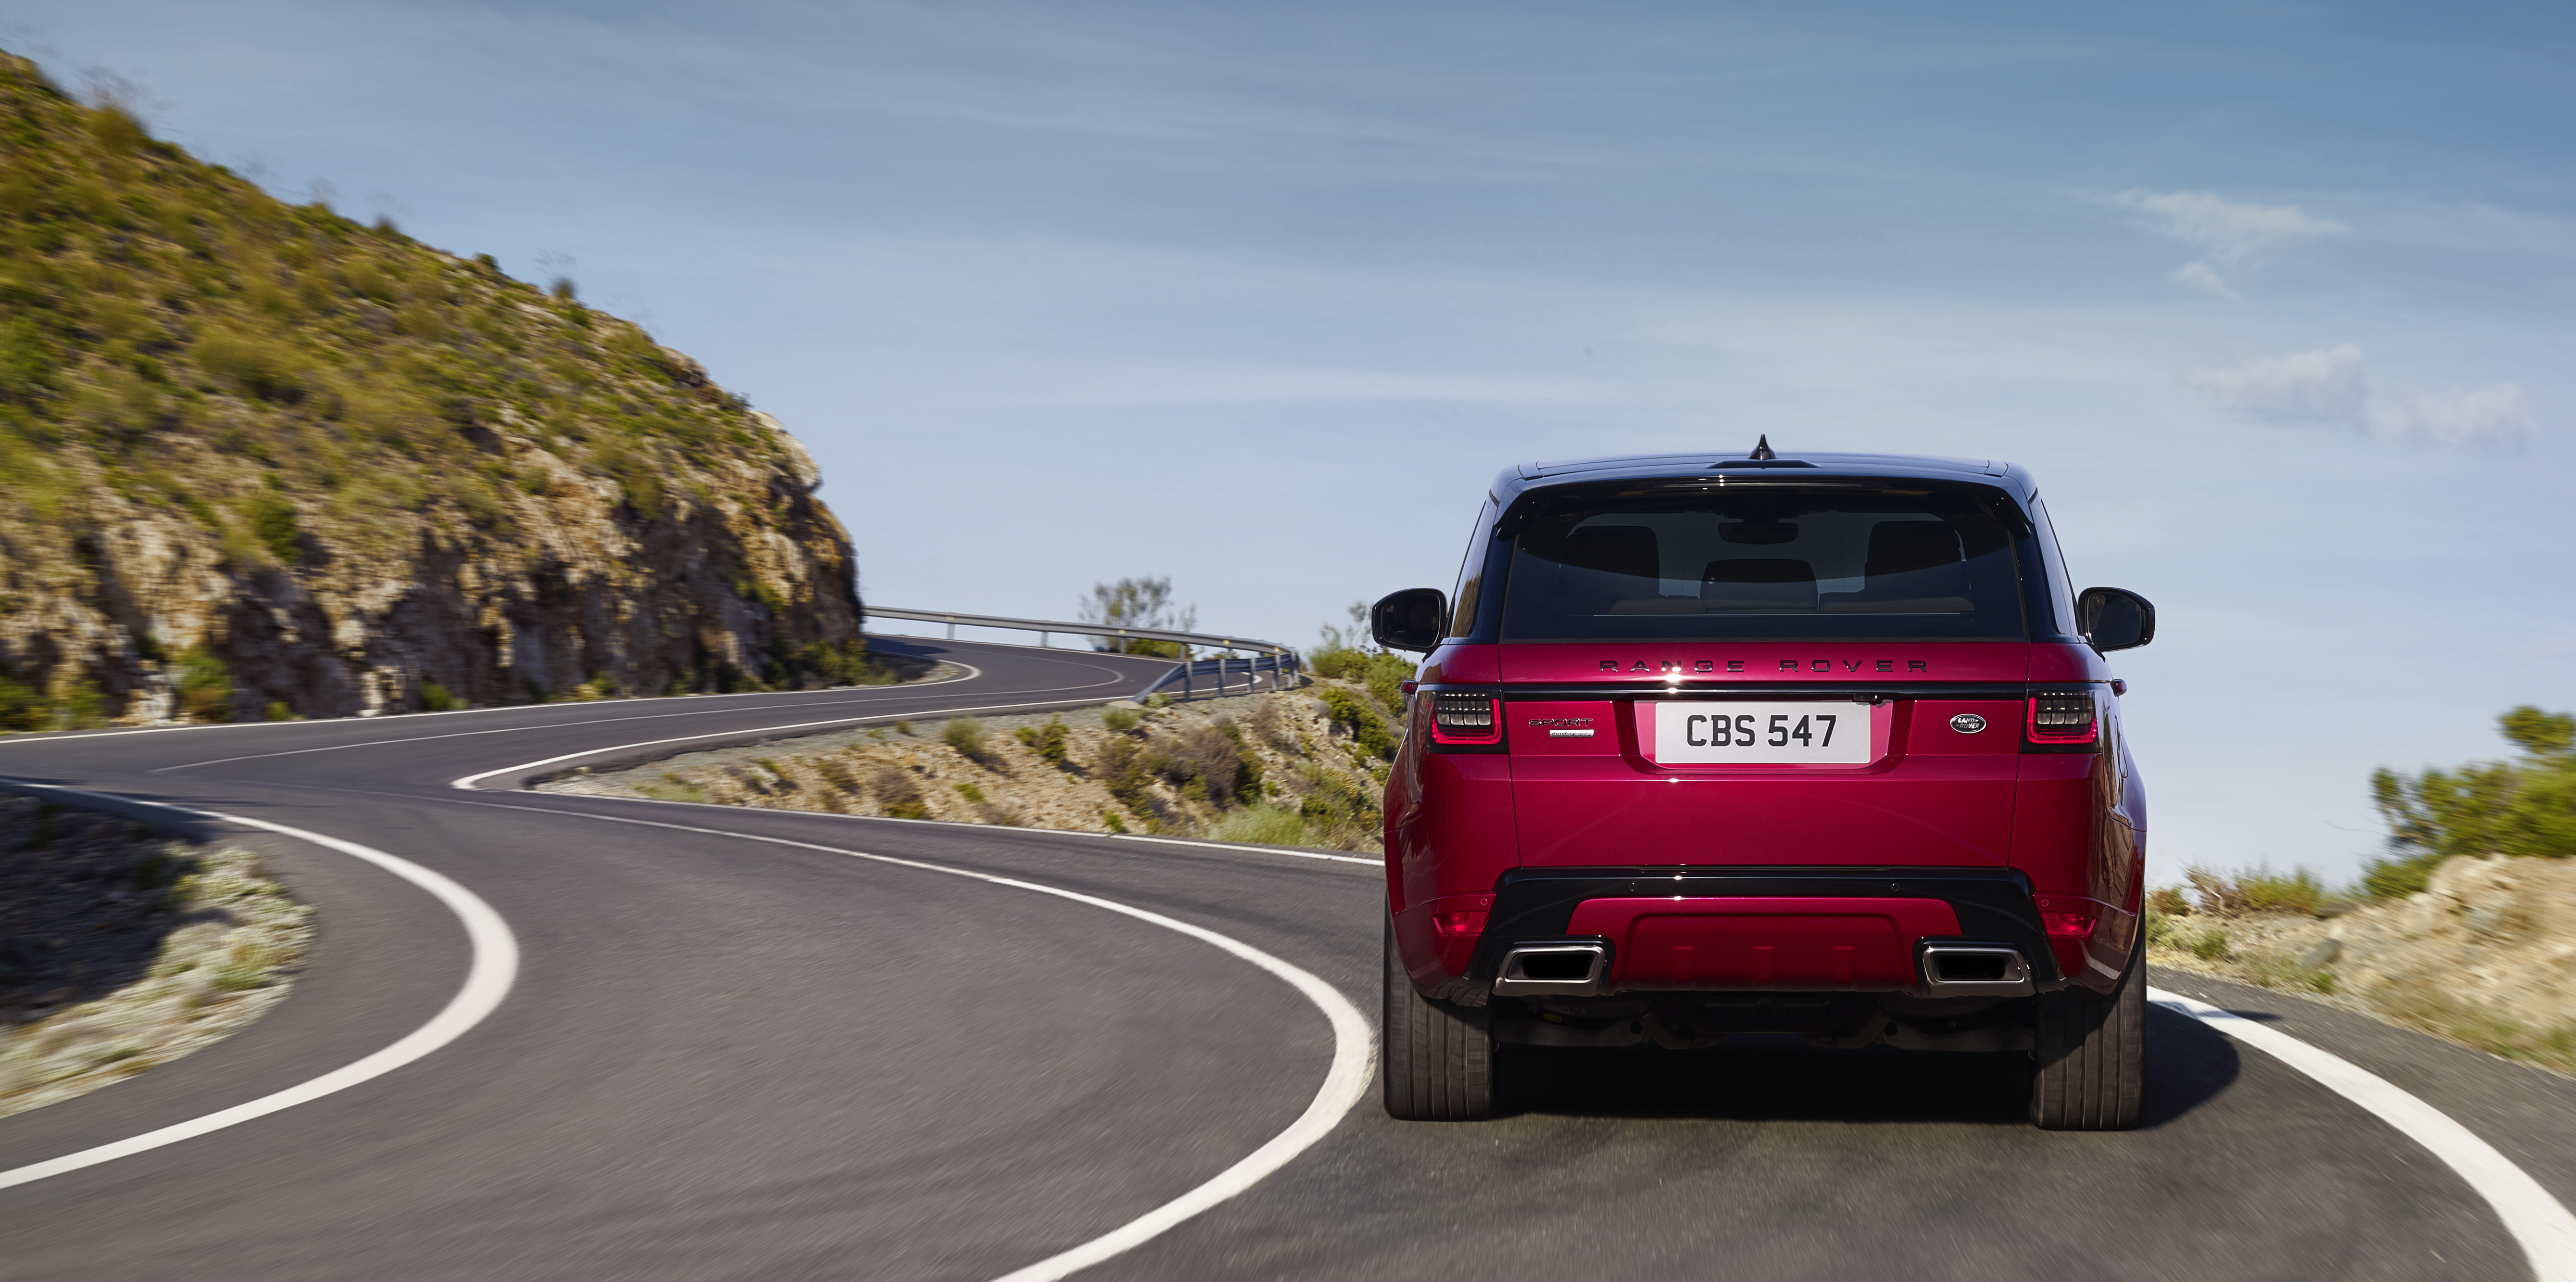 The 2018 Range Rover Sport